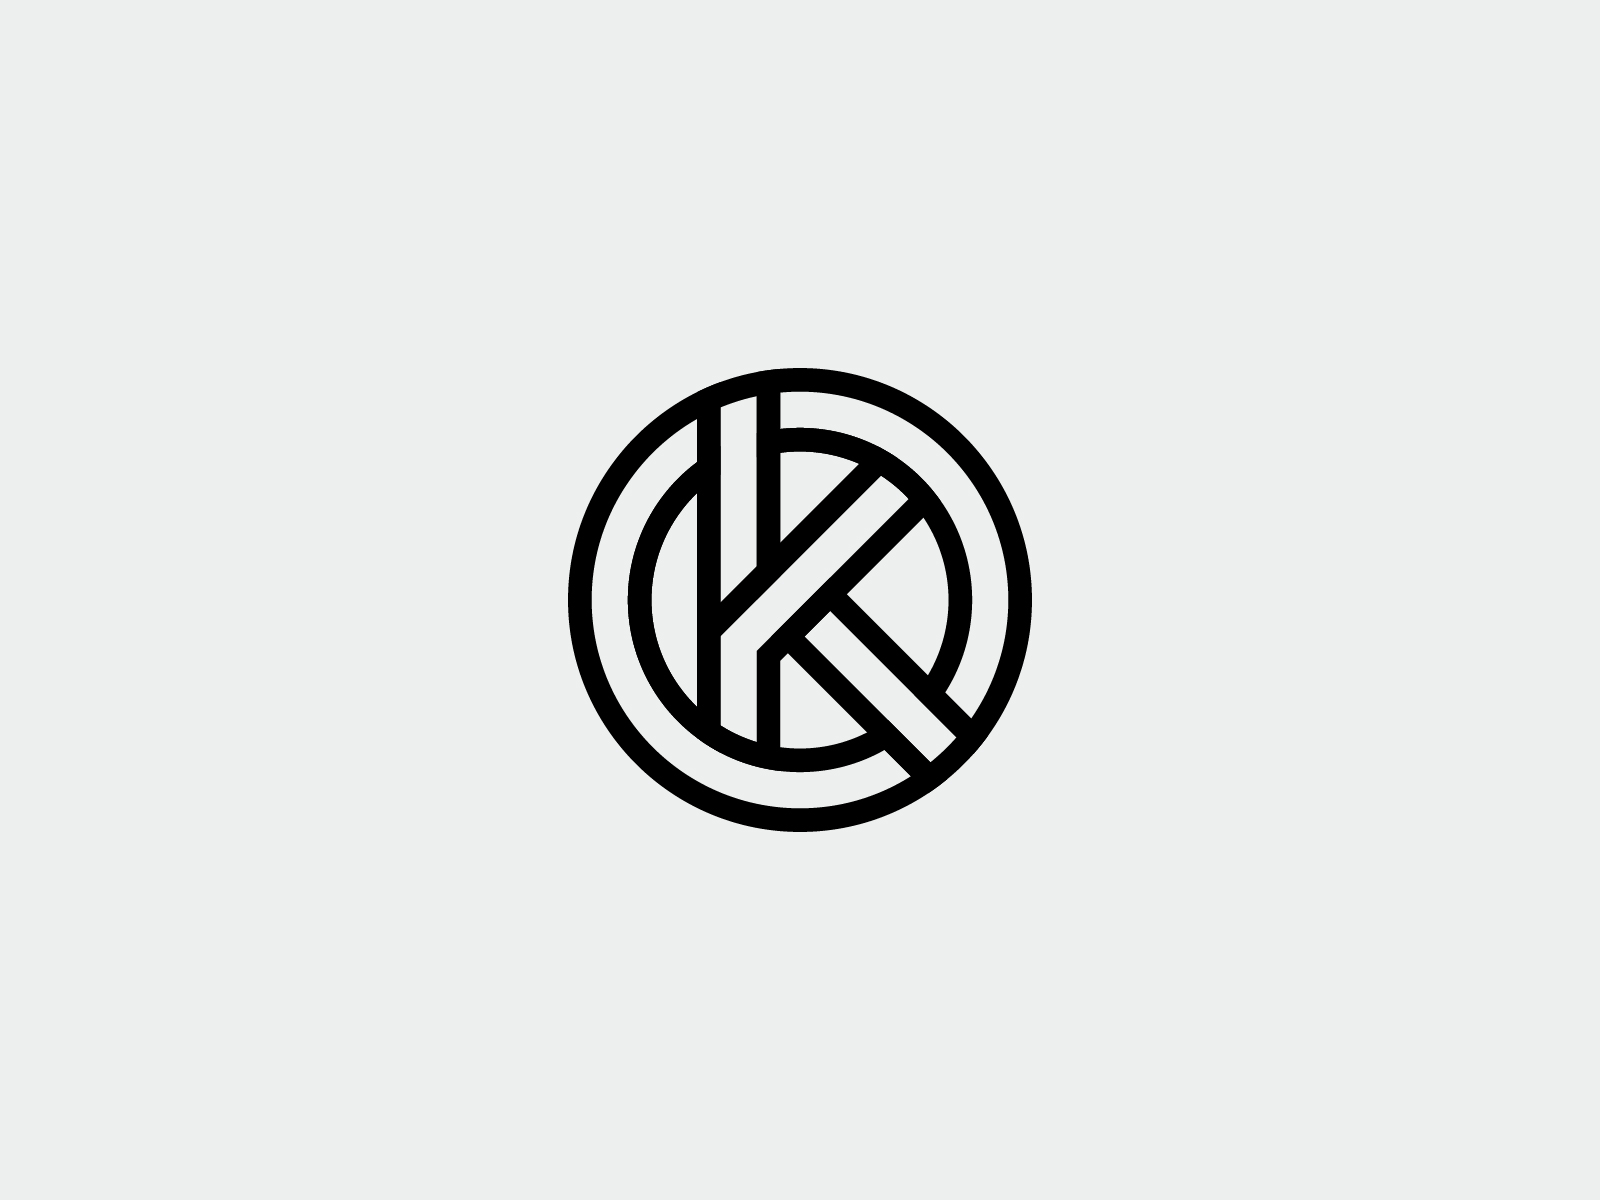 Letter K / OK / KO Monogram Logo by Sabuj Ali on Dribbble